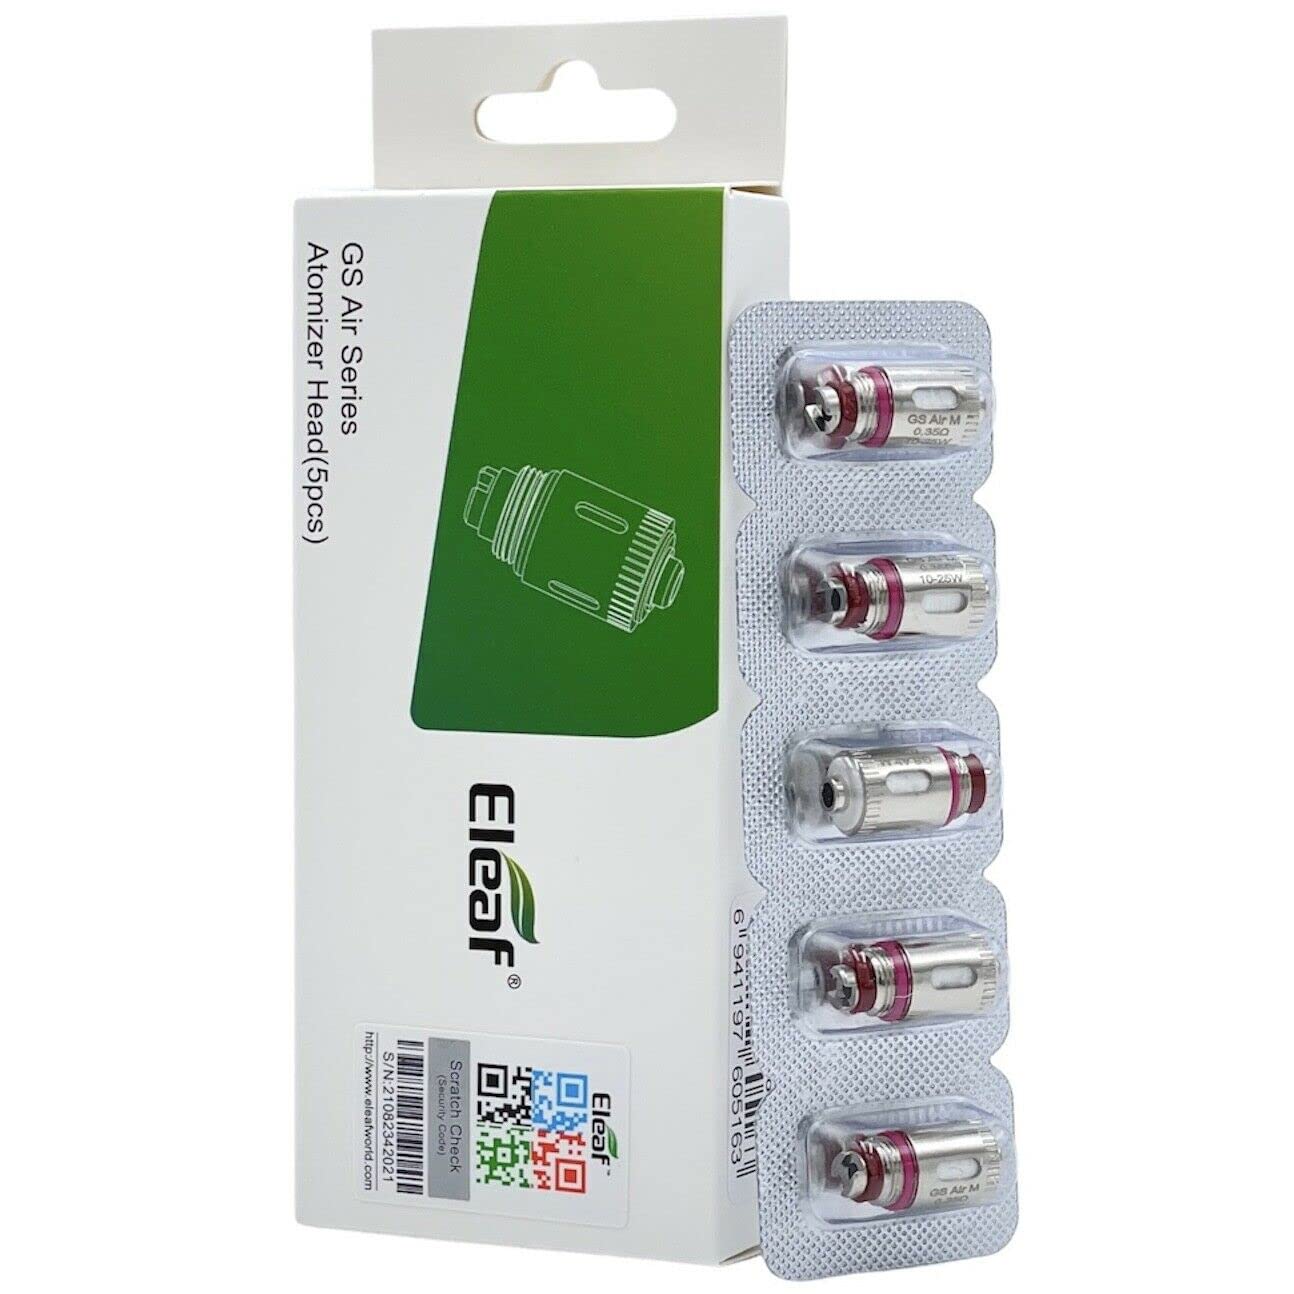 Eleaf GS Air Series Coils - Pack of 5